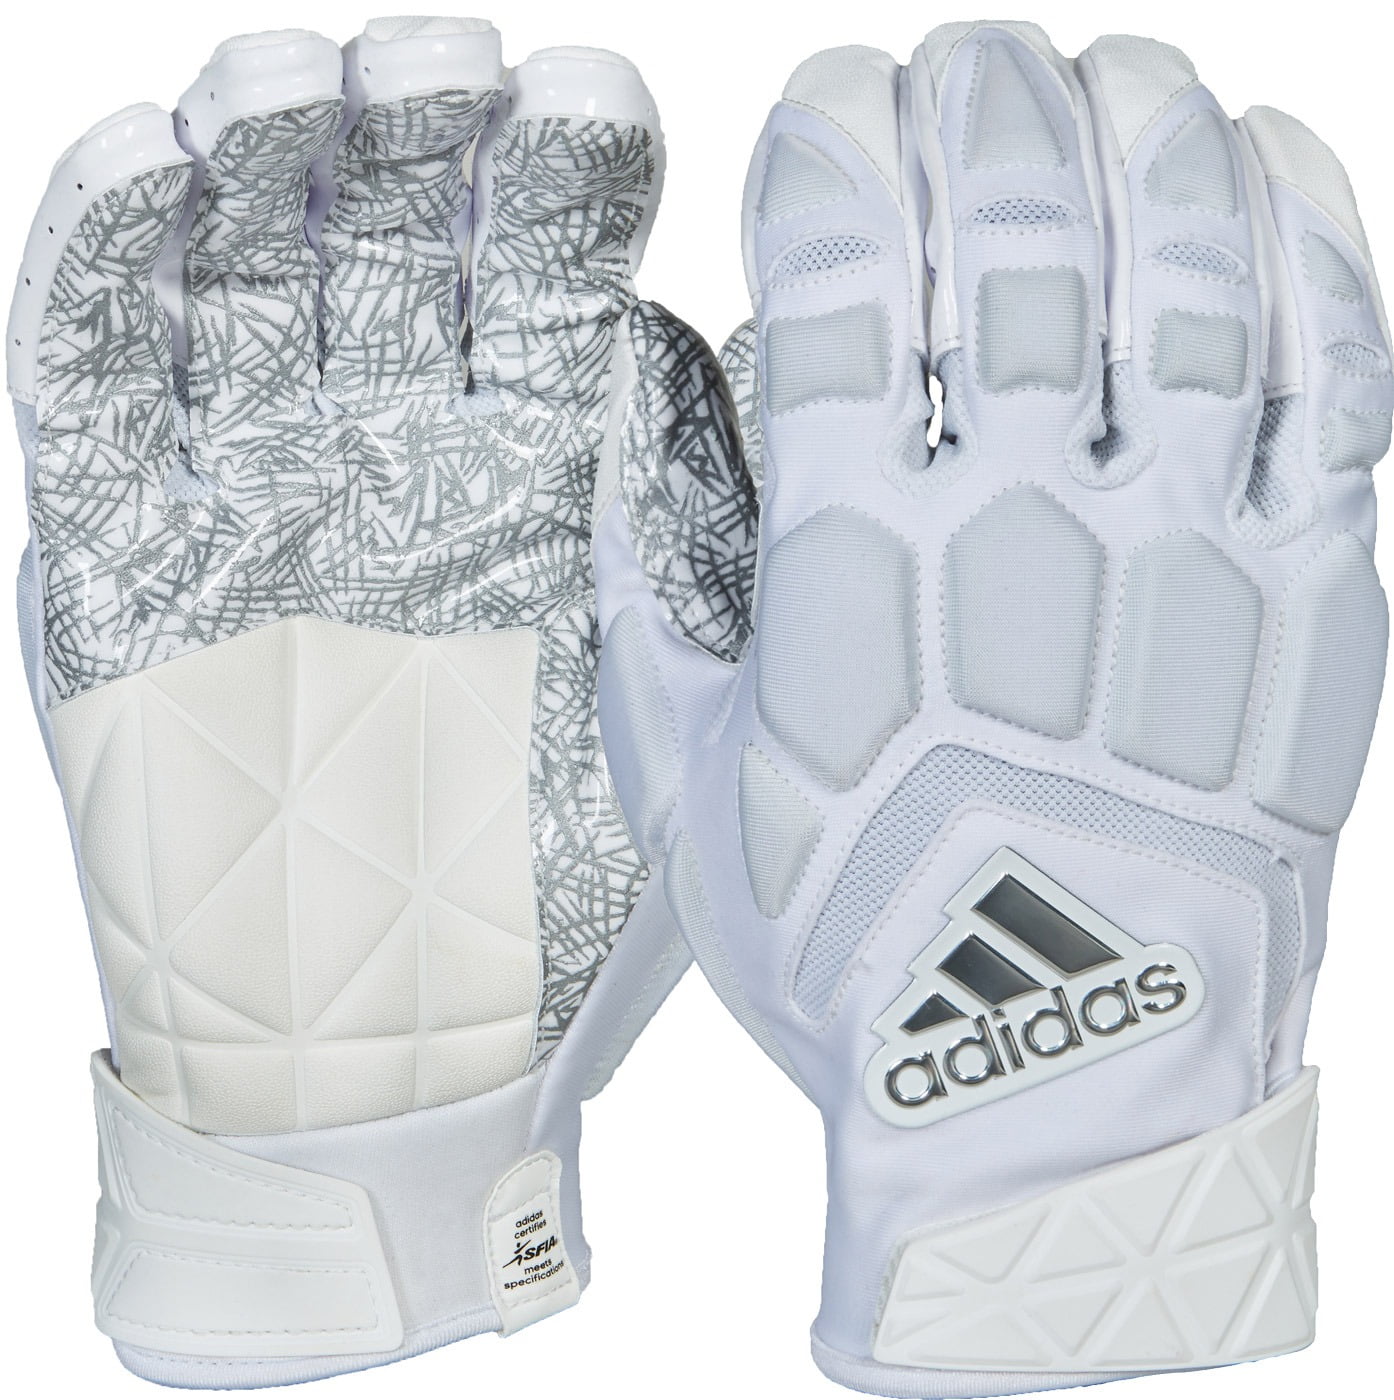 adidas freak max 3.0 lineman gloves